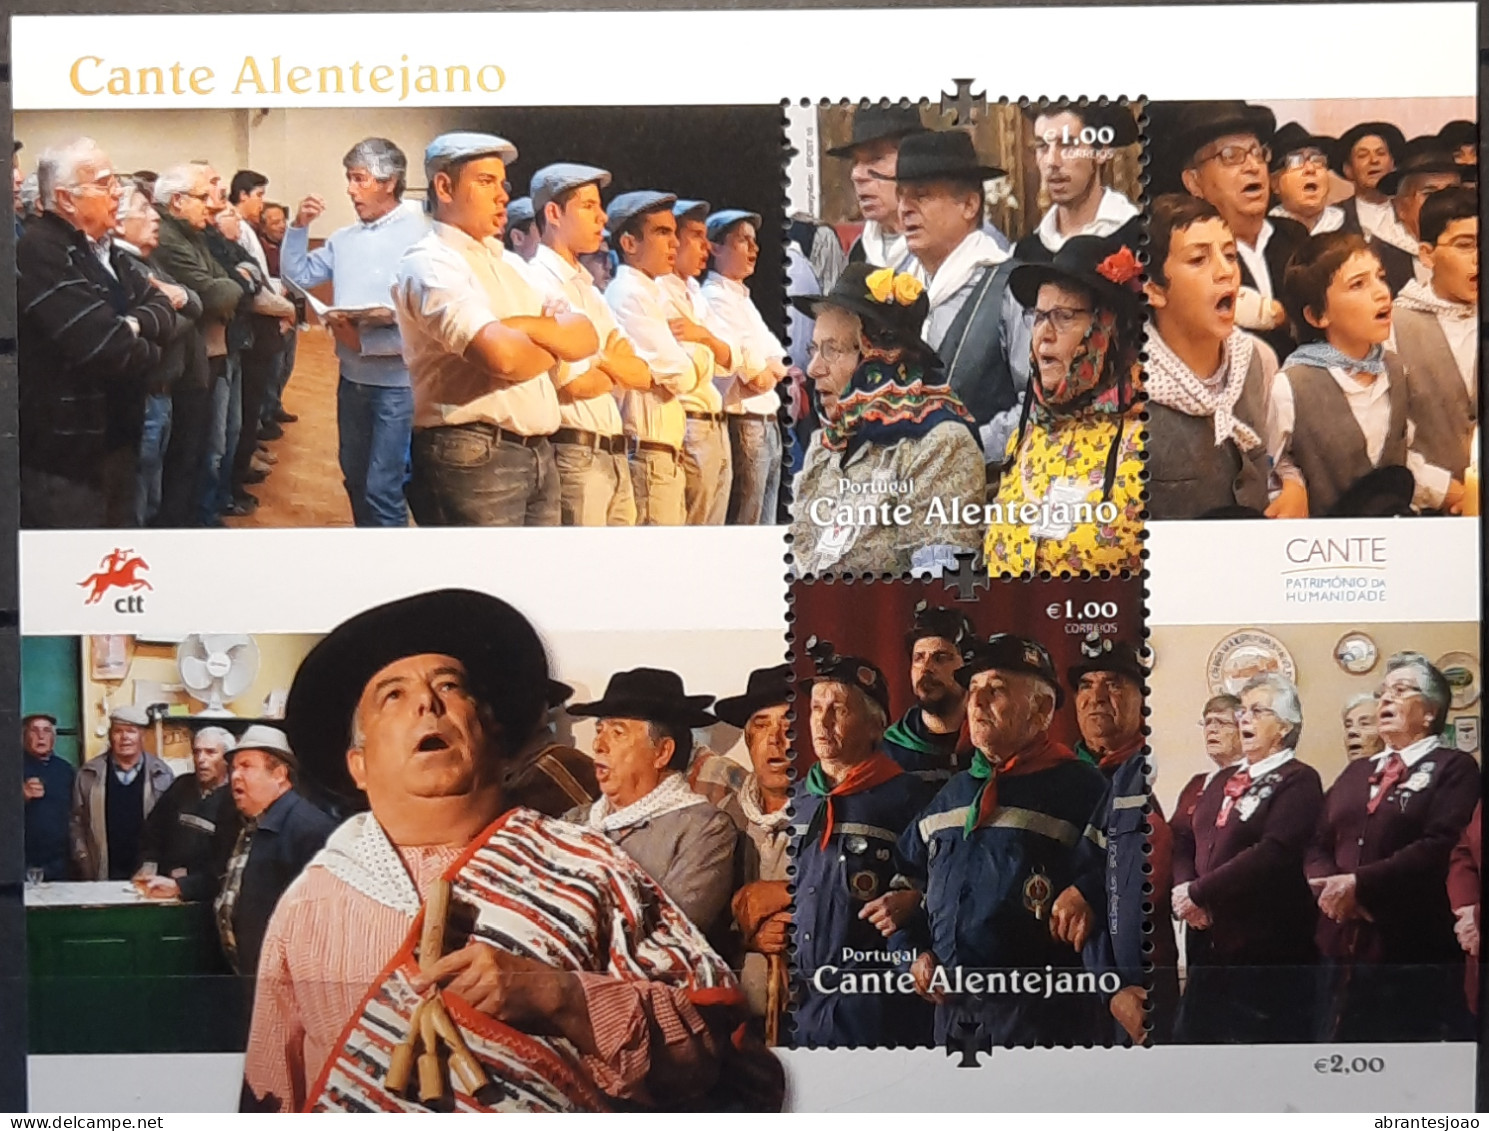 2016 - Portugal - MNH - Songs Of Alentejo - Cante Alentejano - 2 Stamps + Souvenir Sheet Of 1 Stamp - Ongebruikt